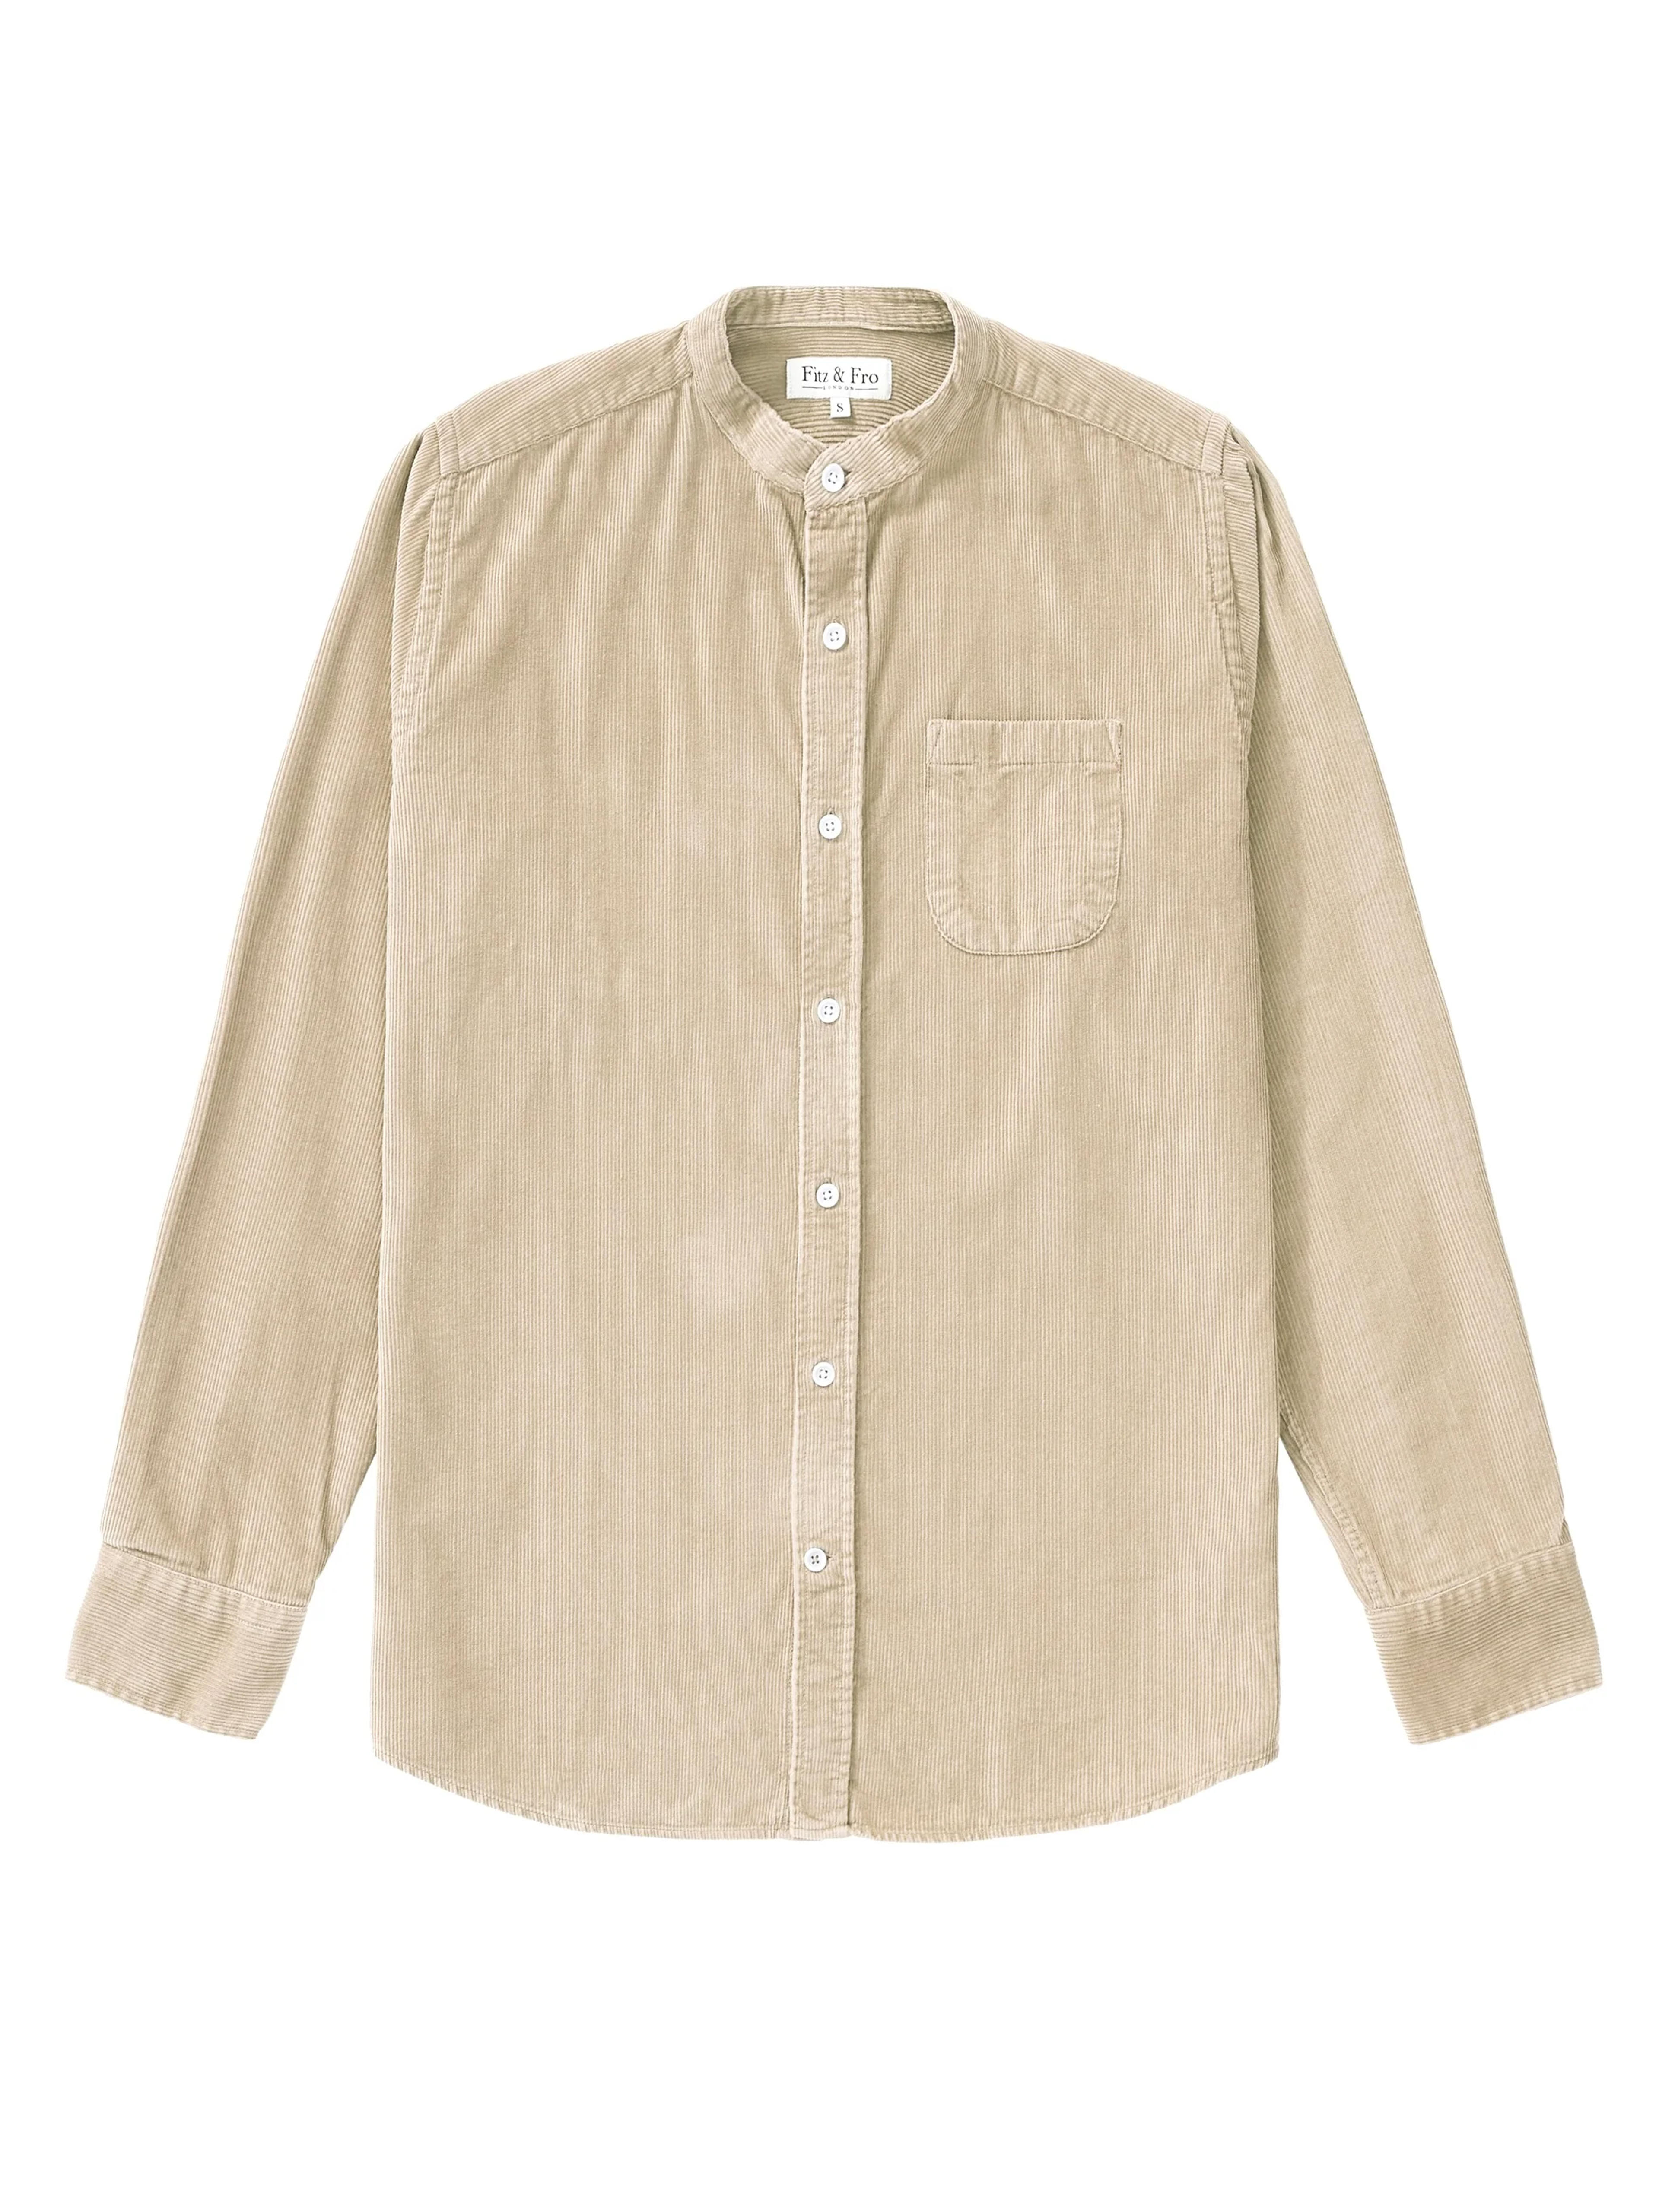 Light Stone Cord Collarless Shirt | Fitz & Fro Menswear